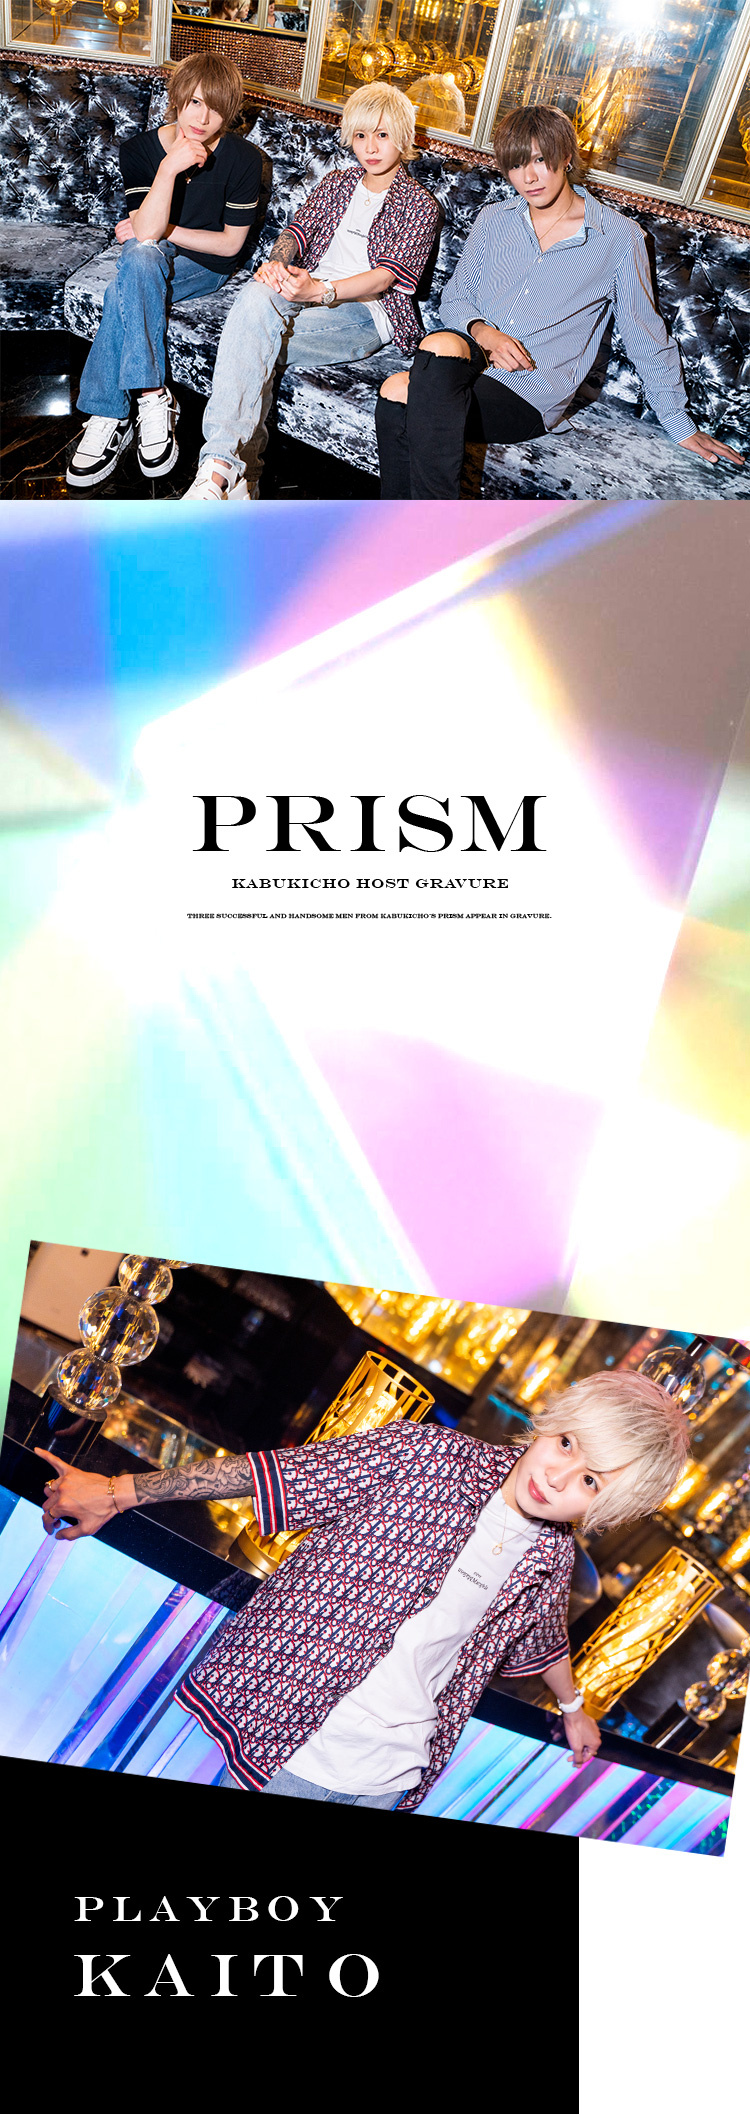 『PRISM』の売れっ子イケメン3人組が、グラビアに登場!!